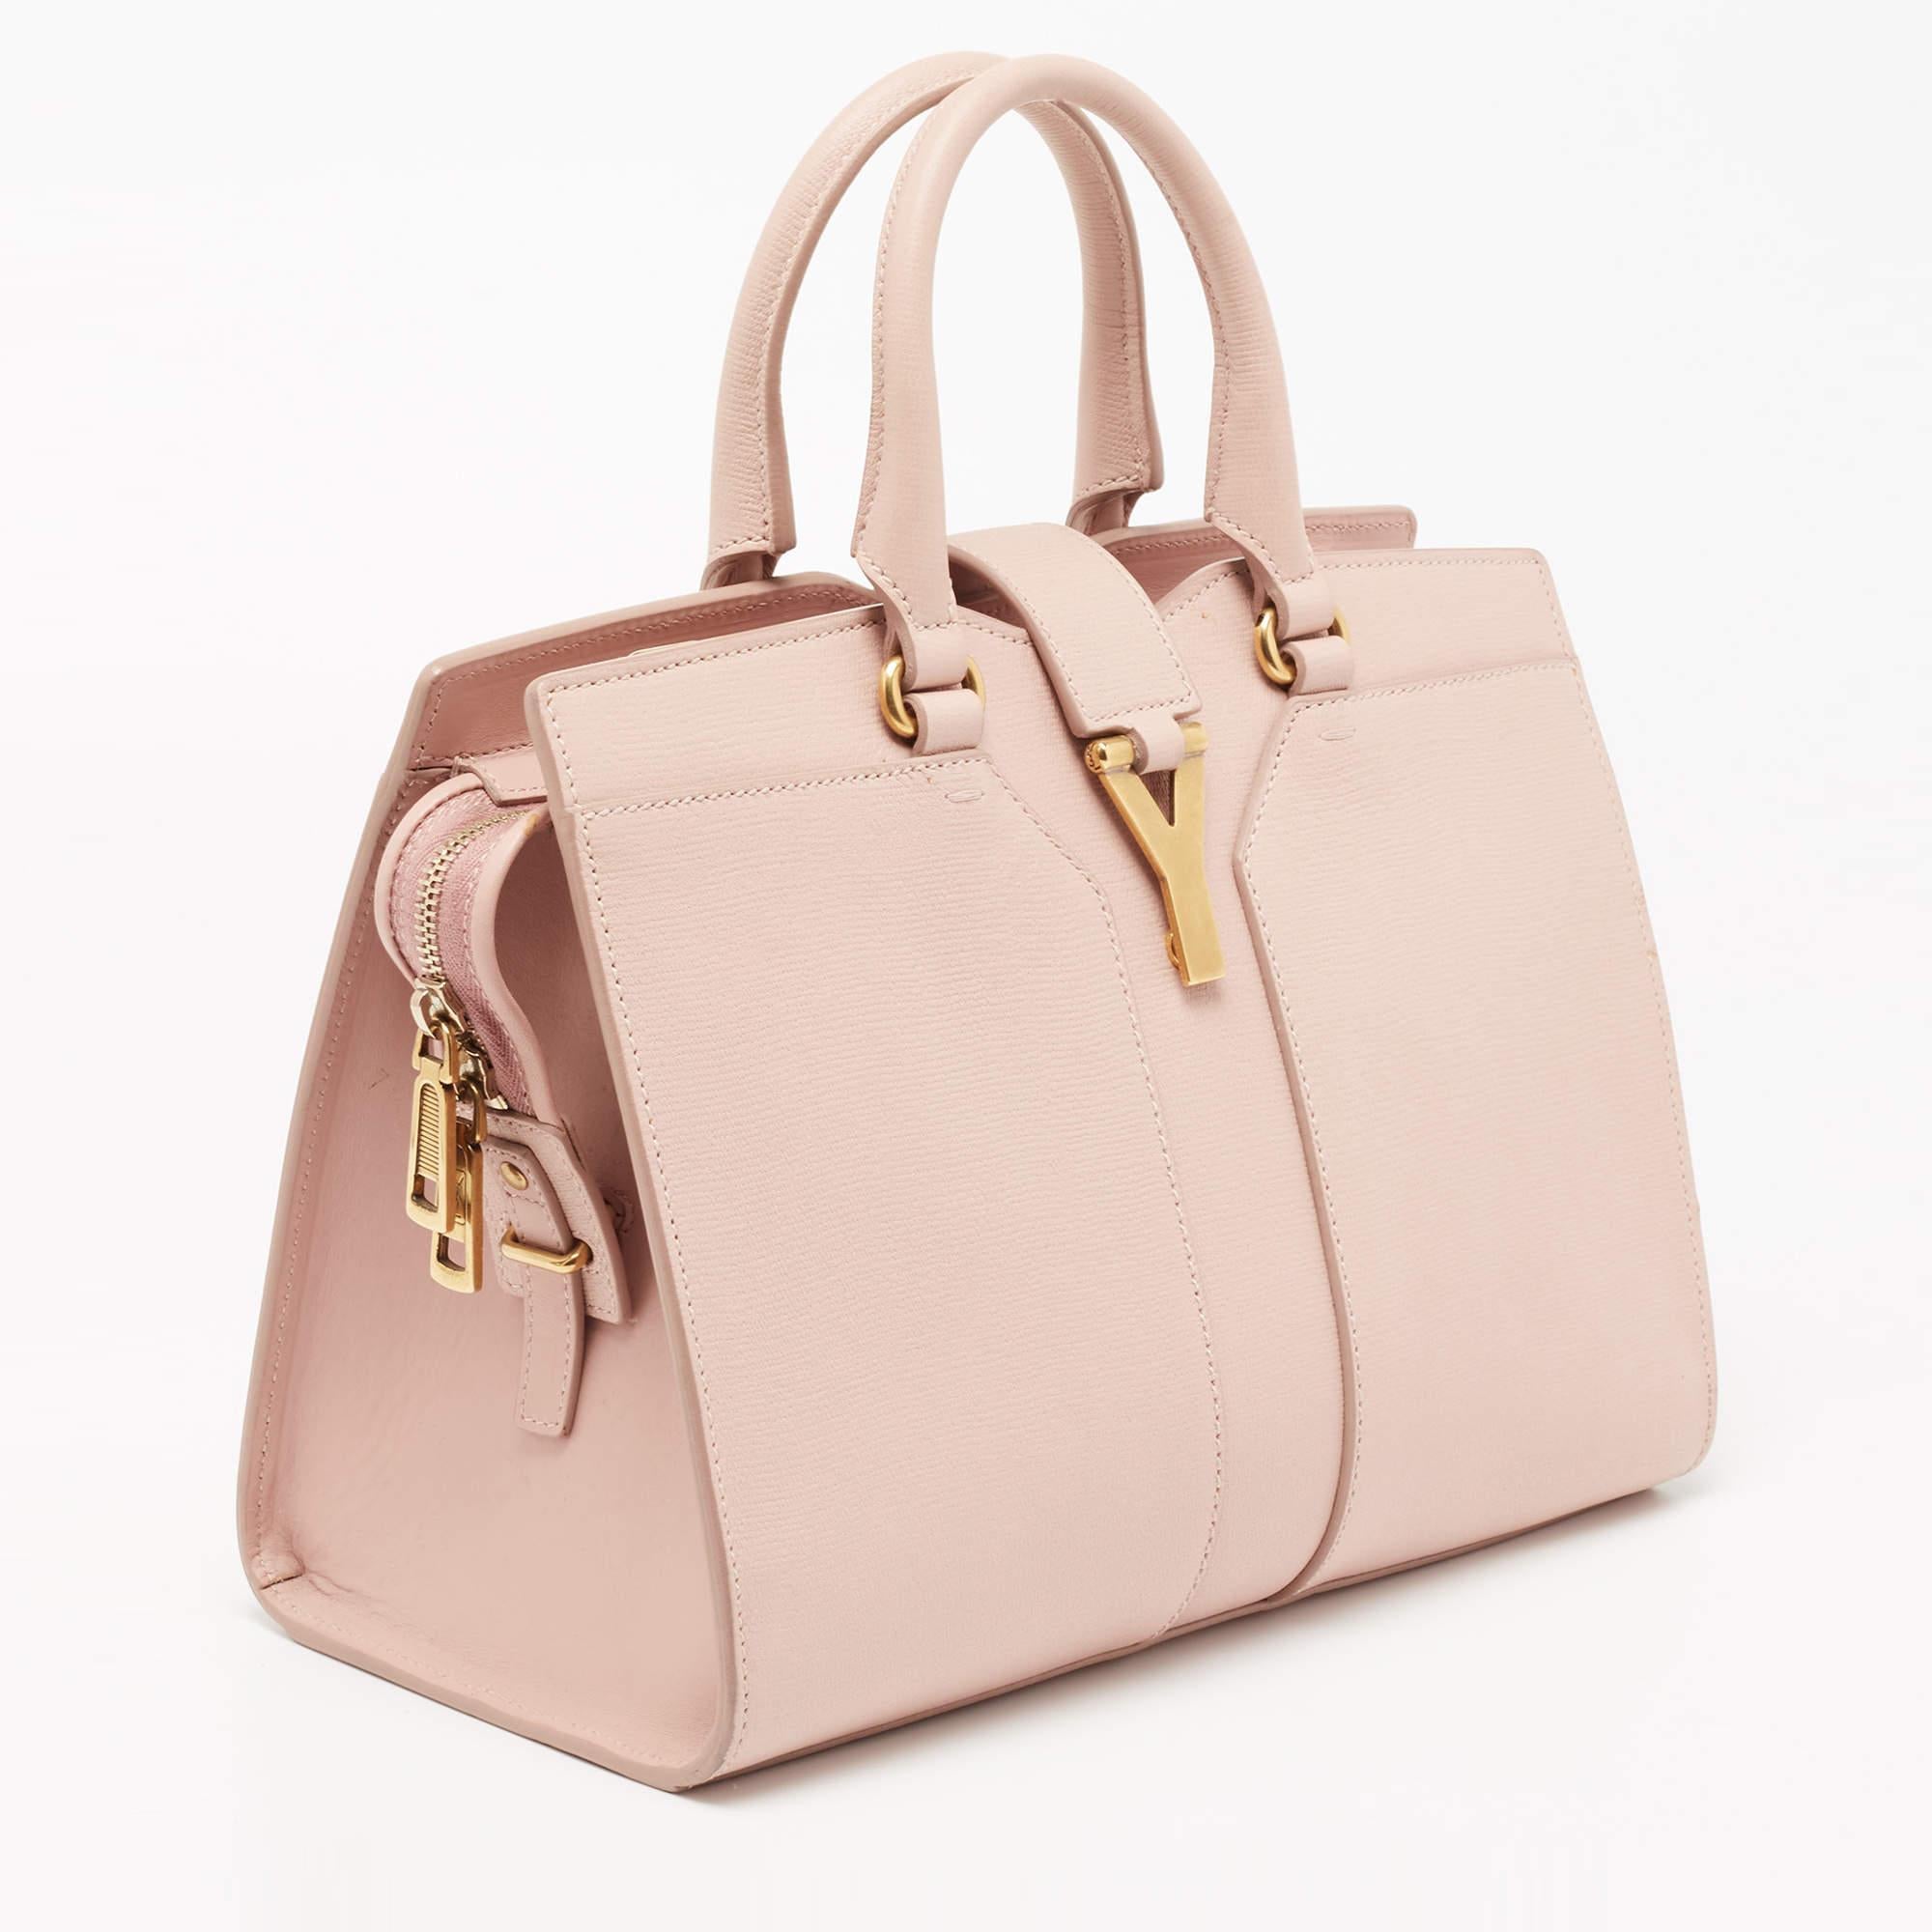 ysl pink handbag